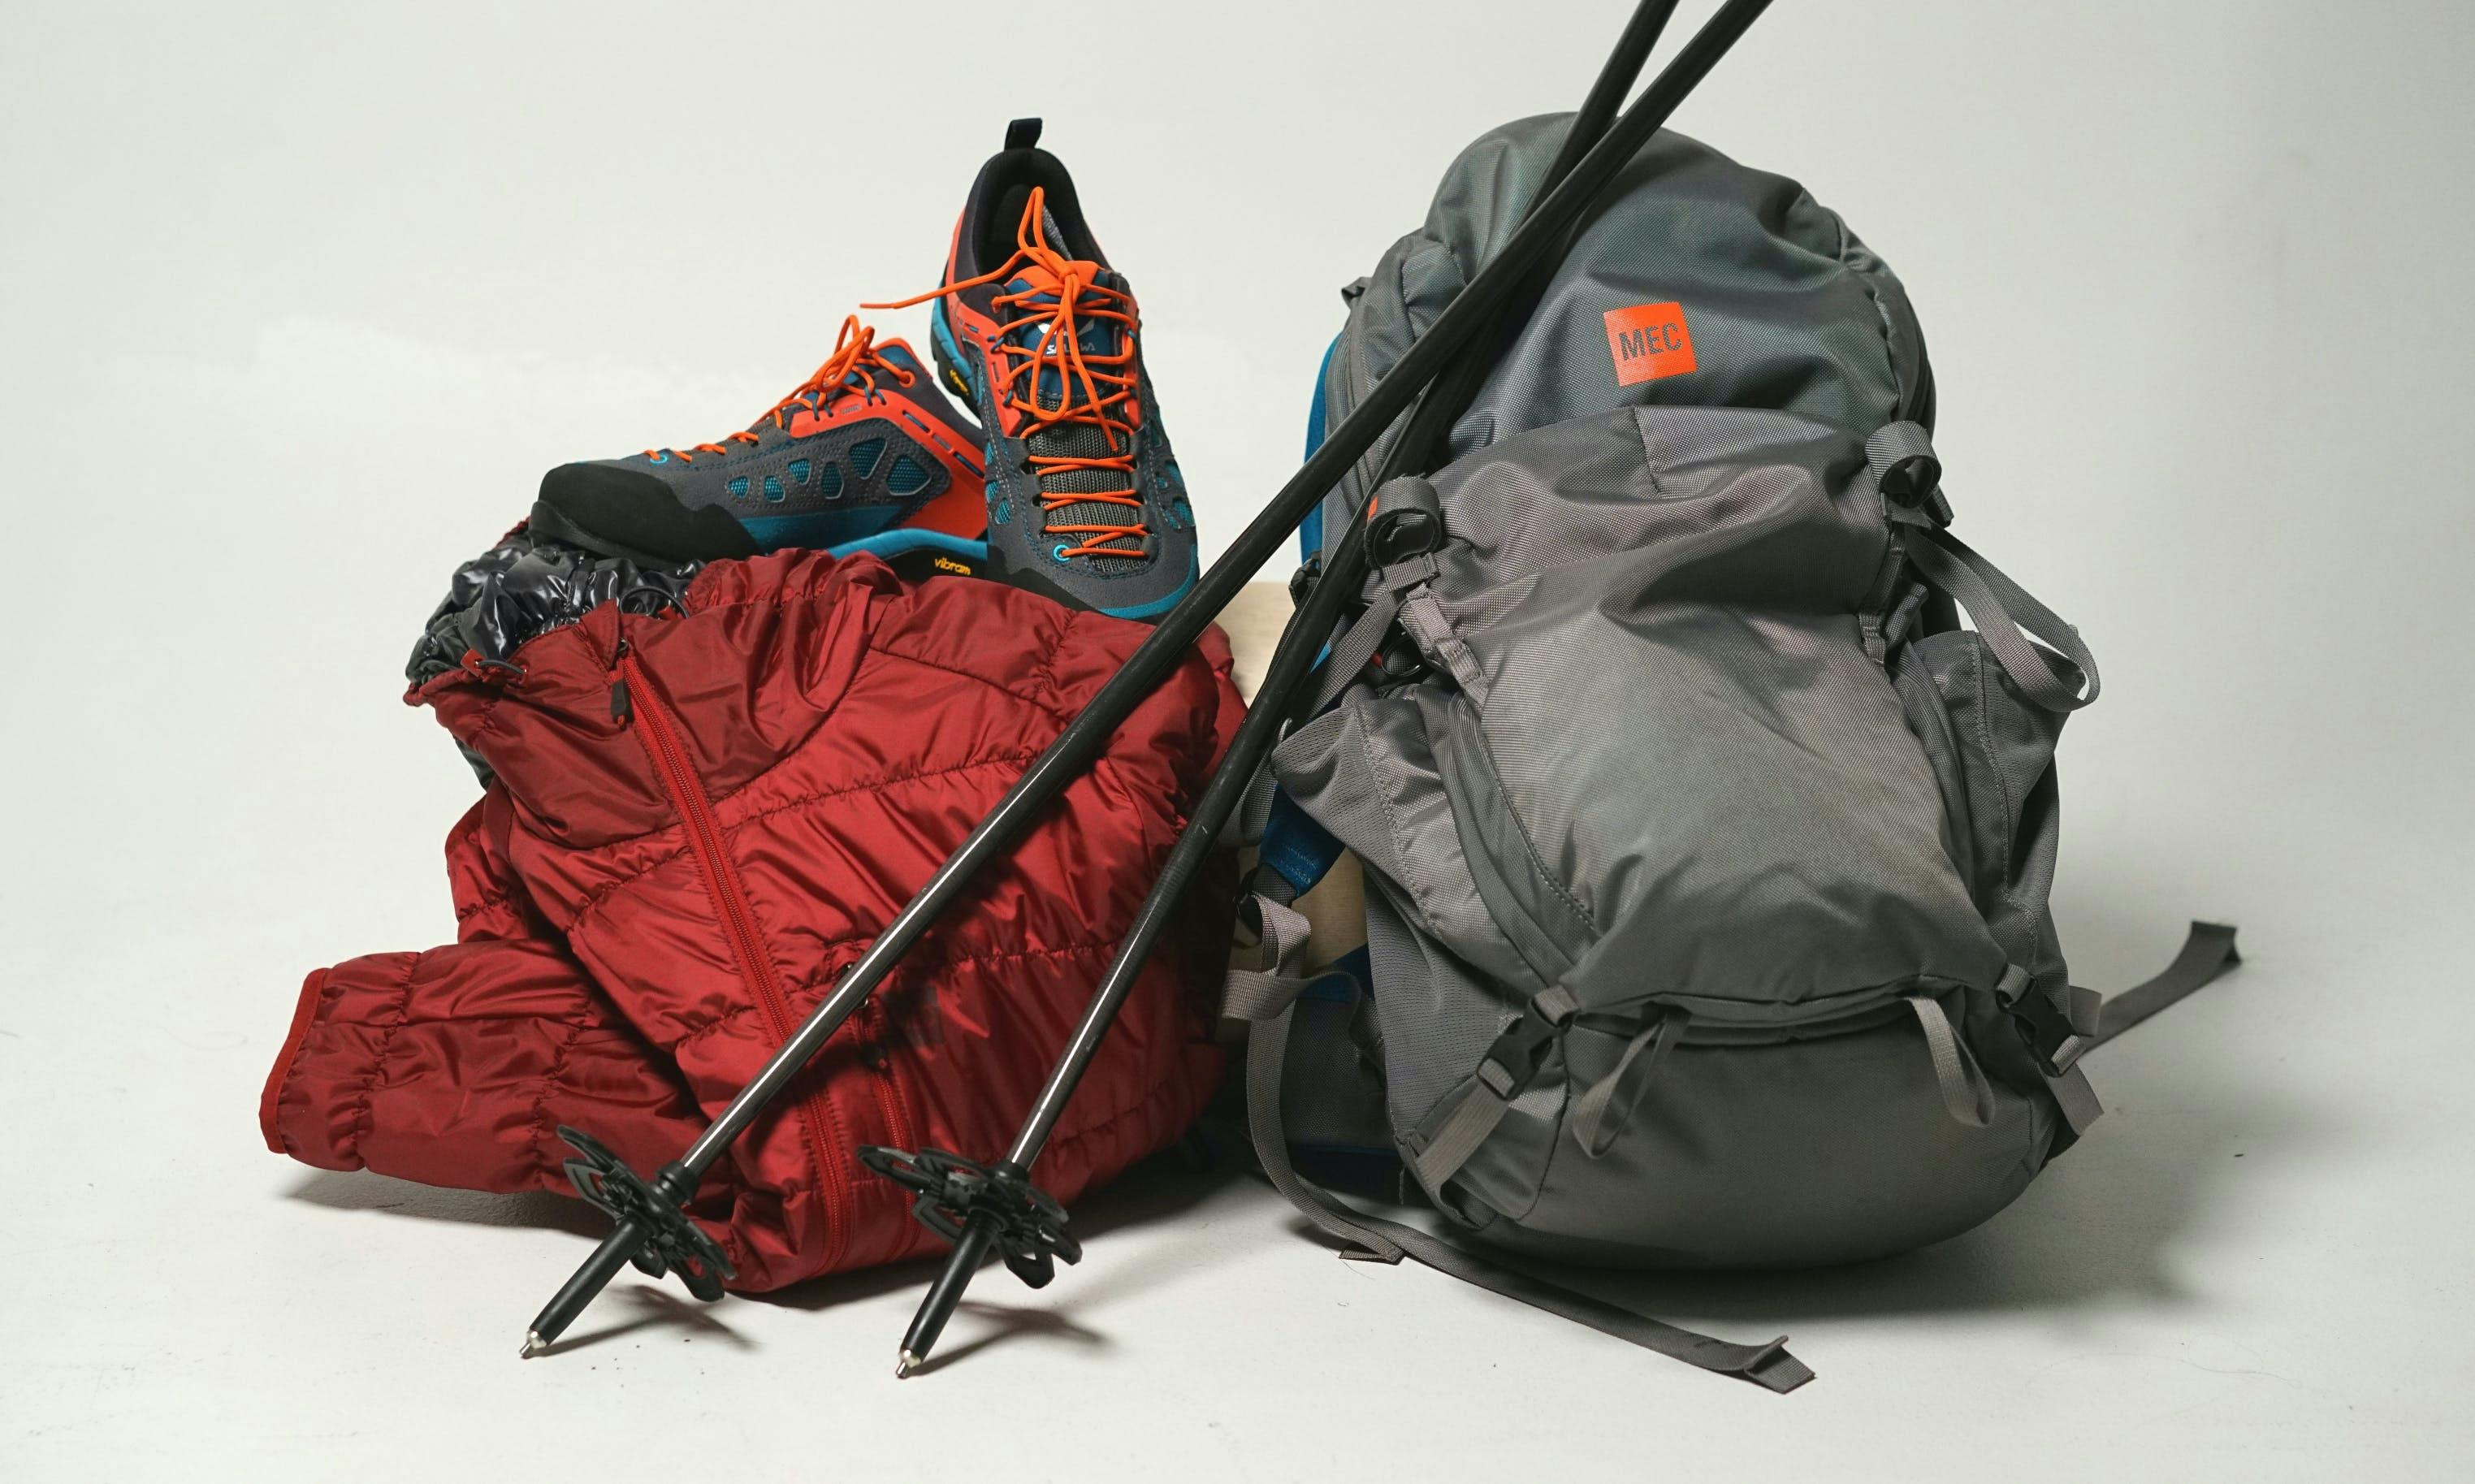 Ski poles with hiking backpacks